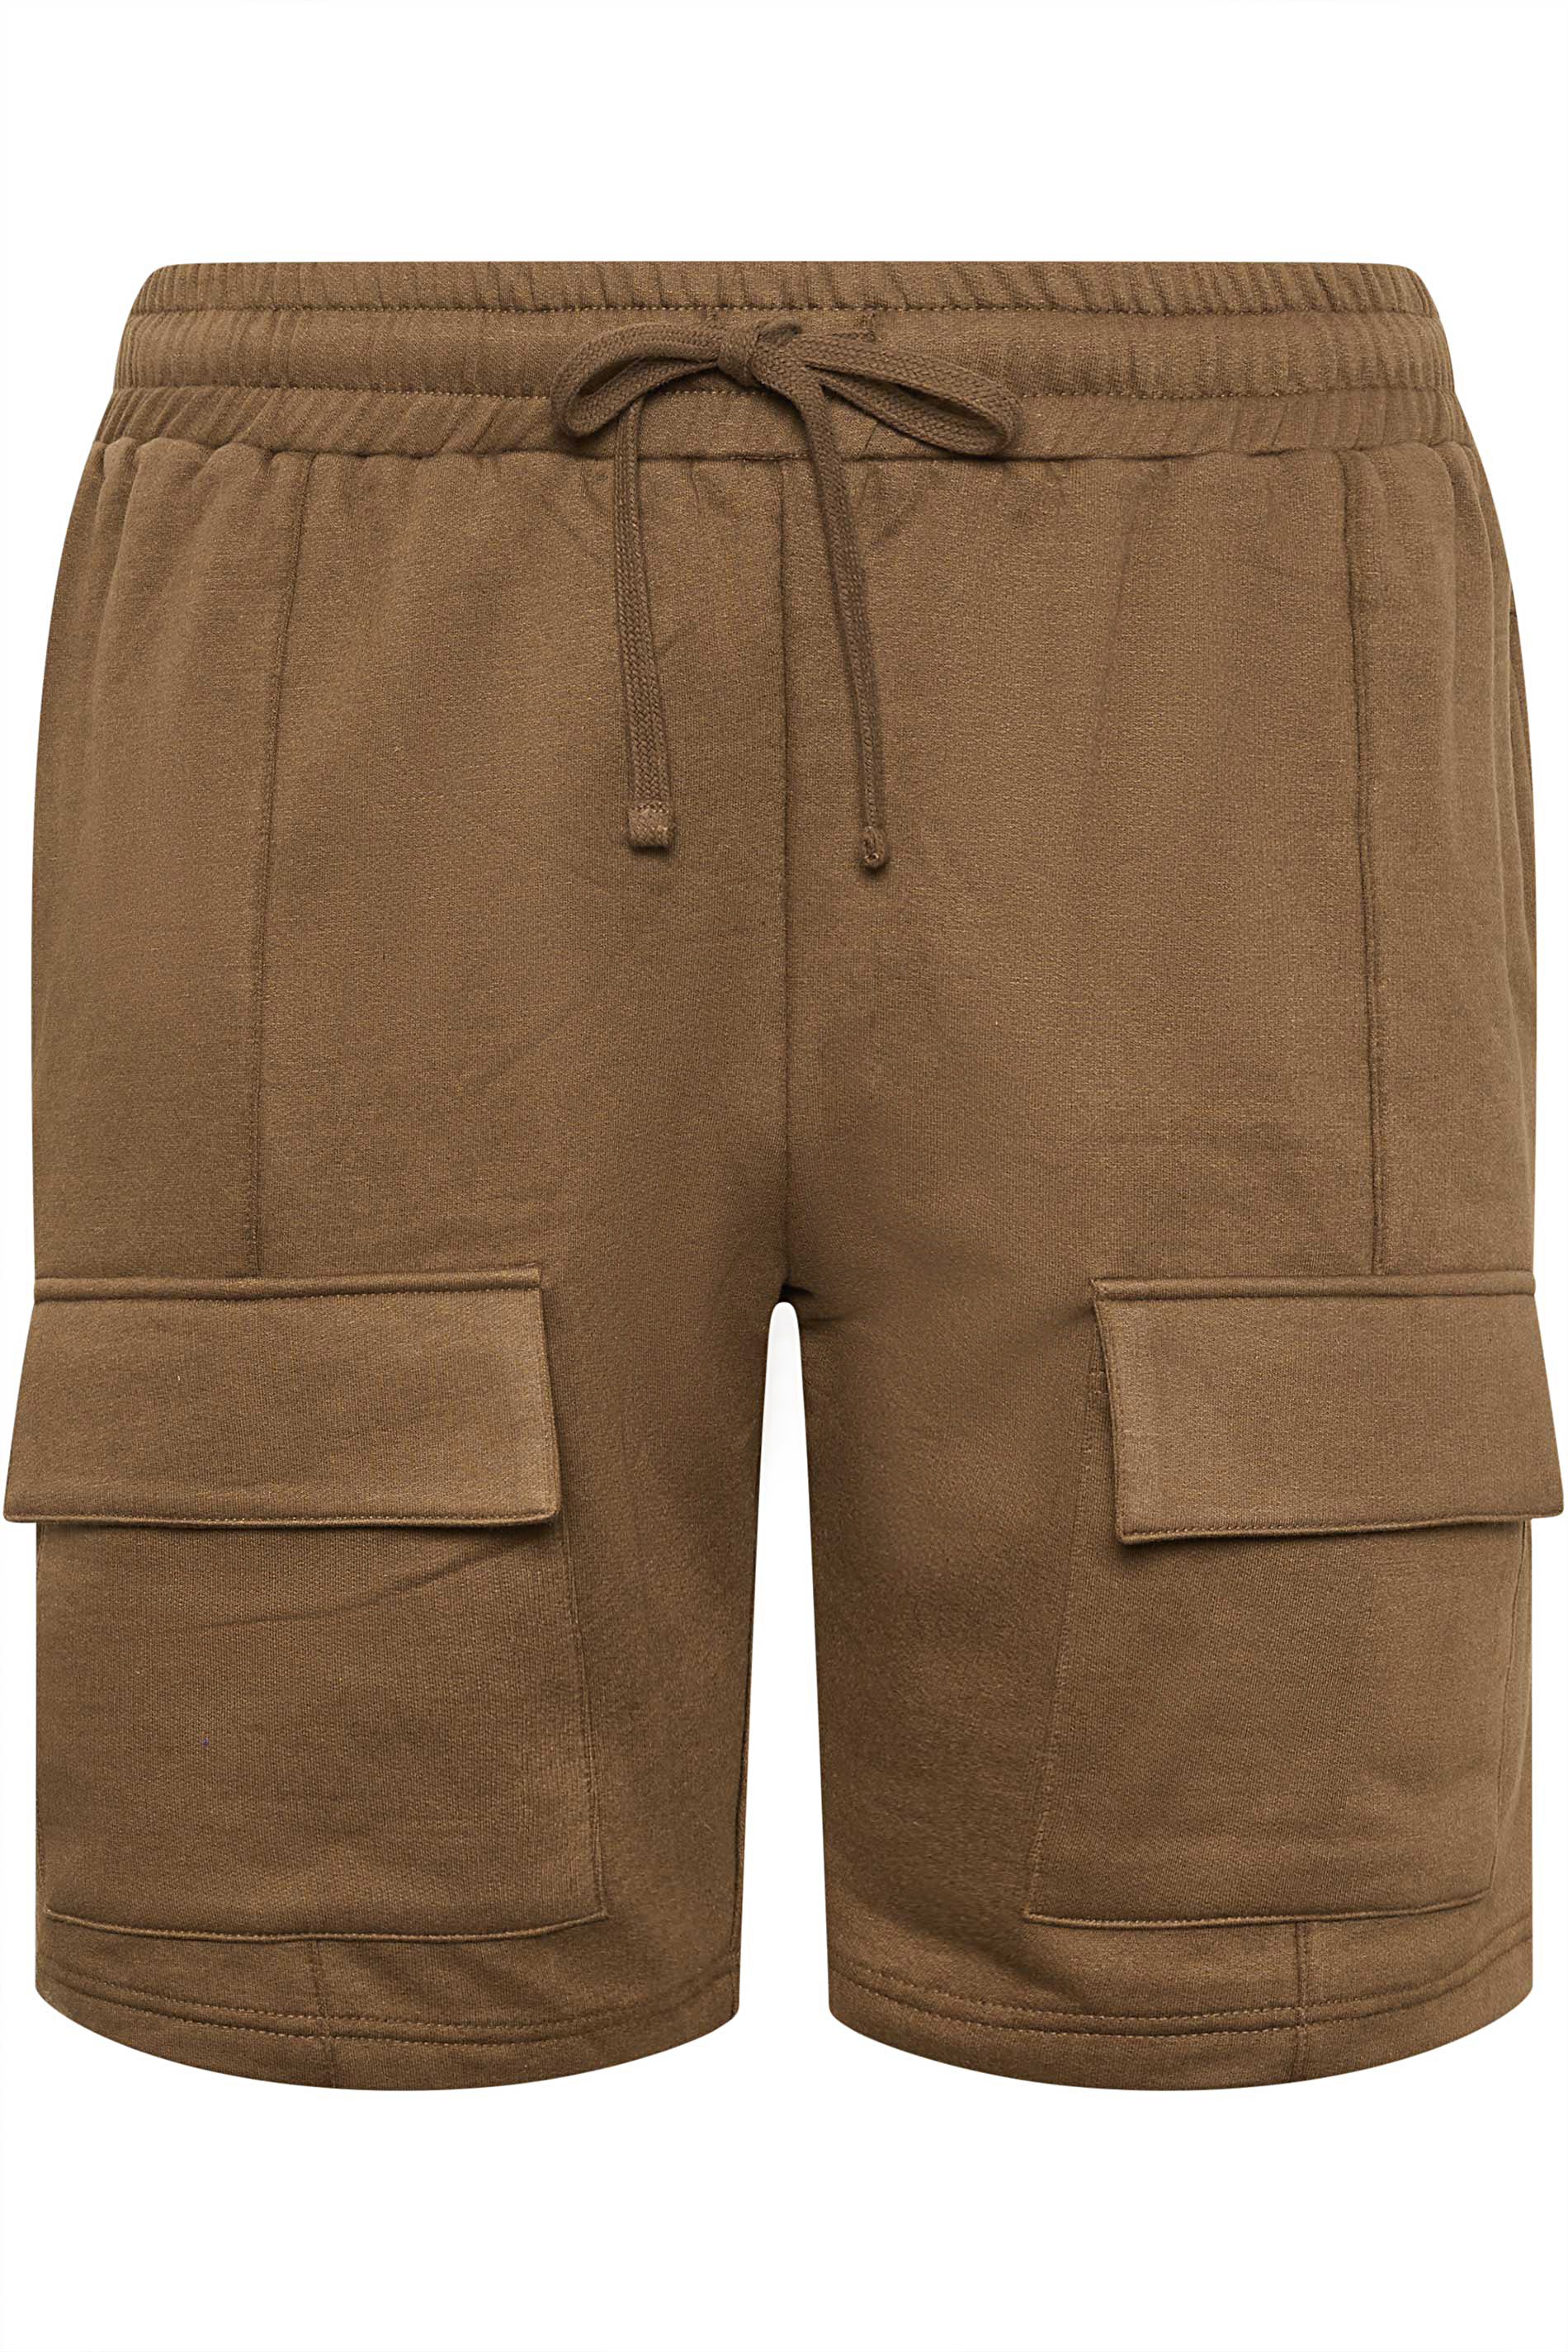 BadRhino Big & Tall Brown Cargo Shorts | BadRhino 3